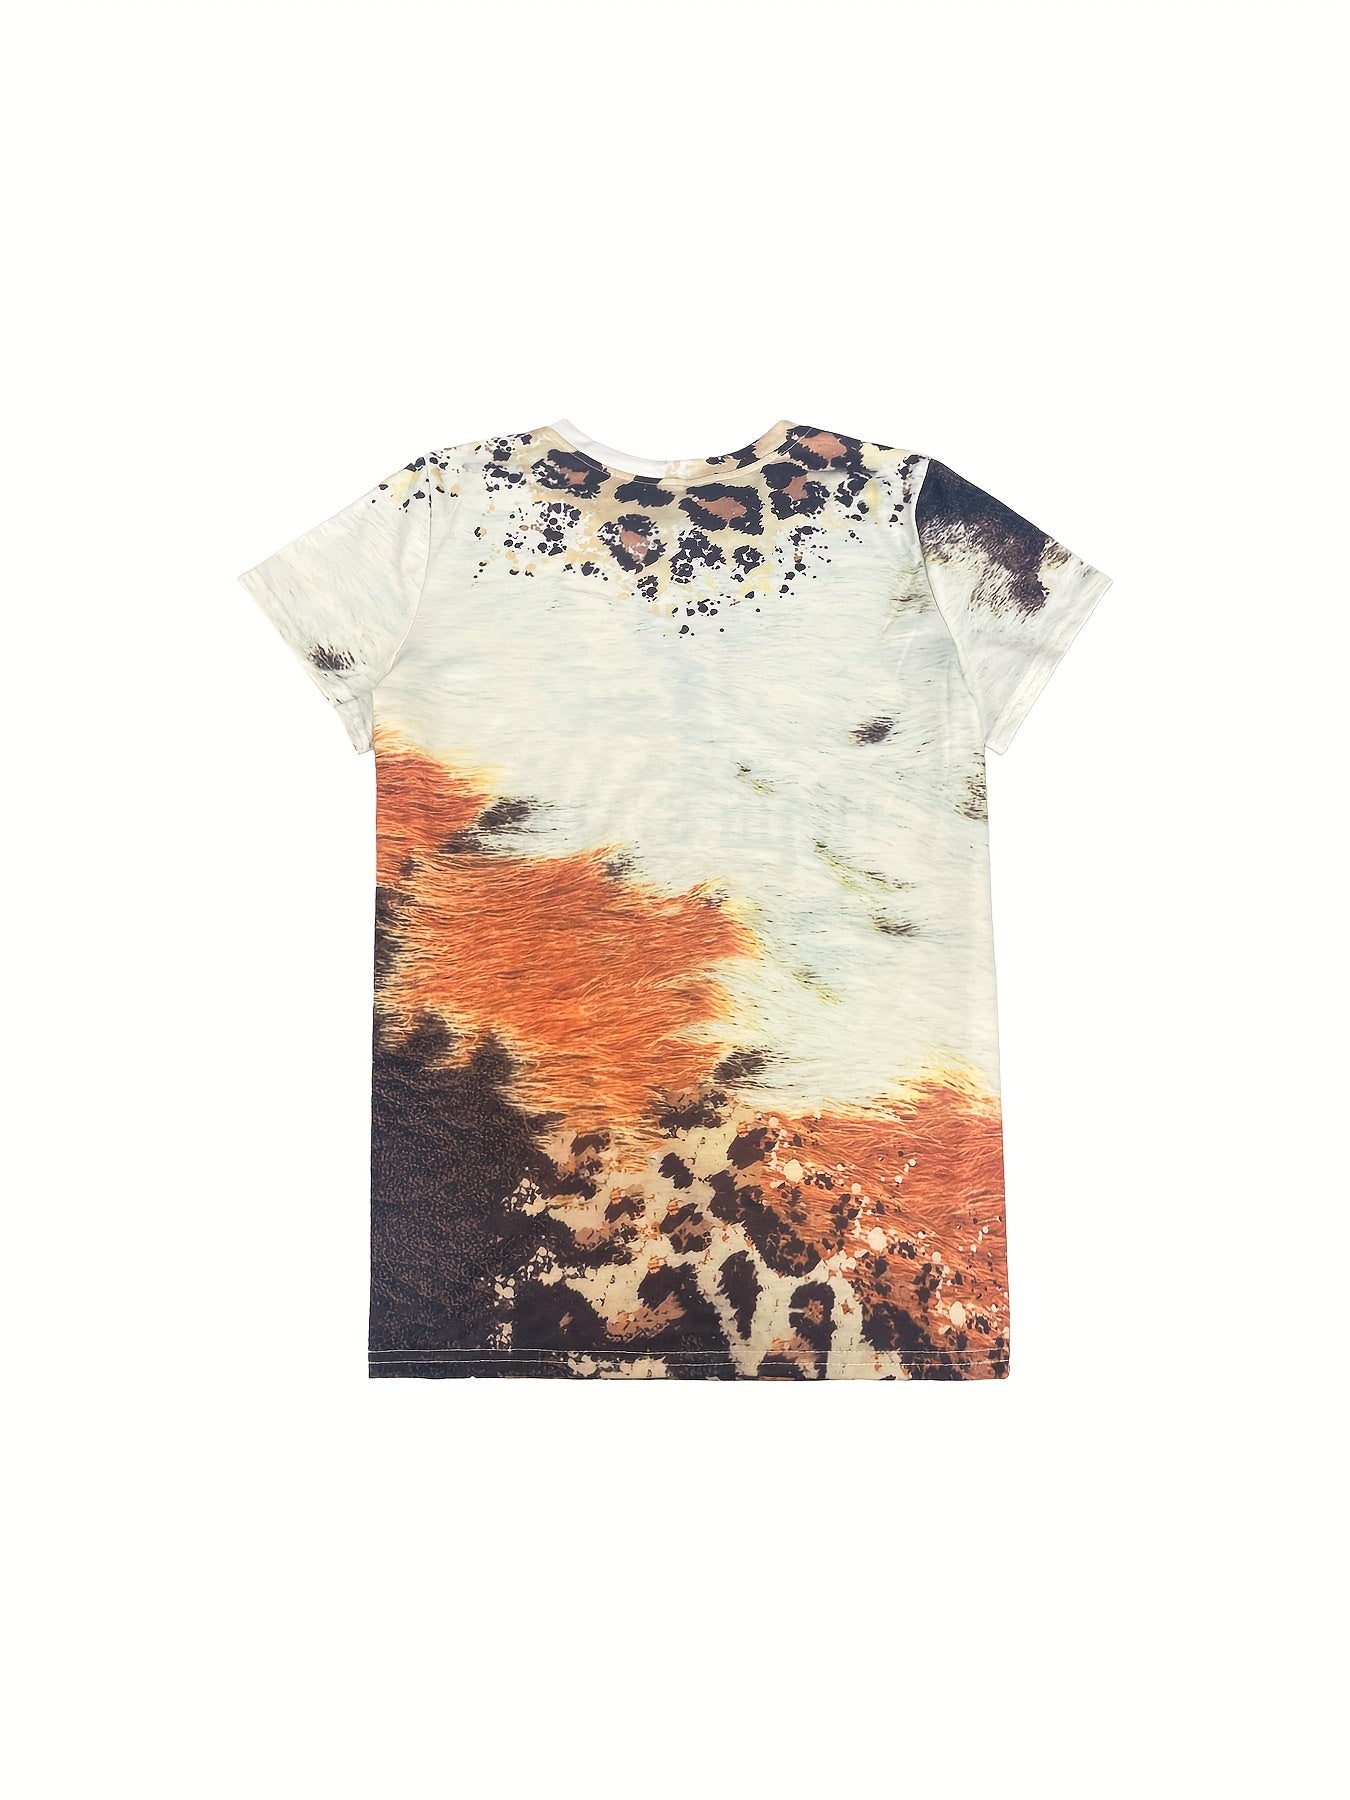 Leopard Print Cow Letter T-shirt - Women's Casual Crew Neck Short Sleeve Tee